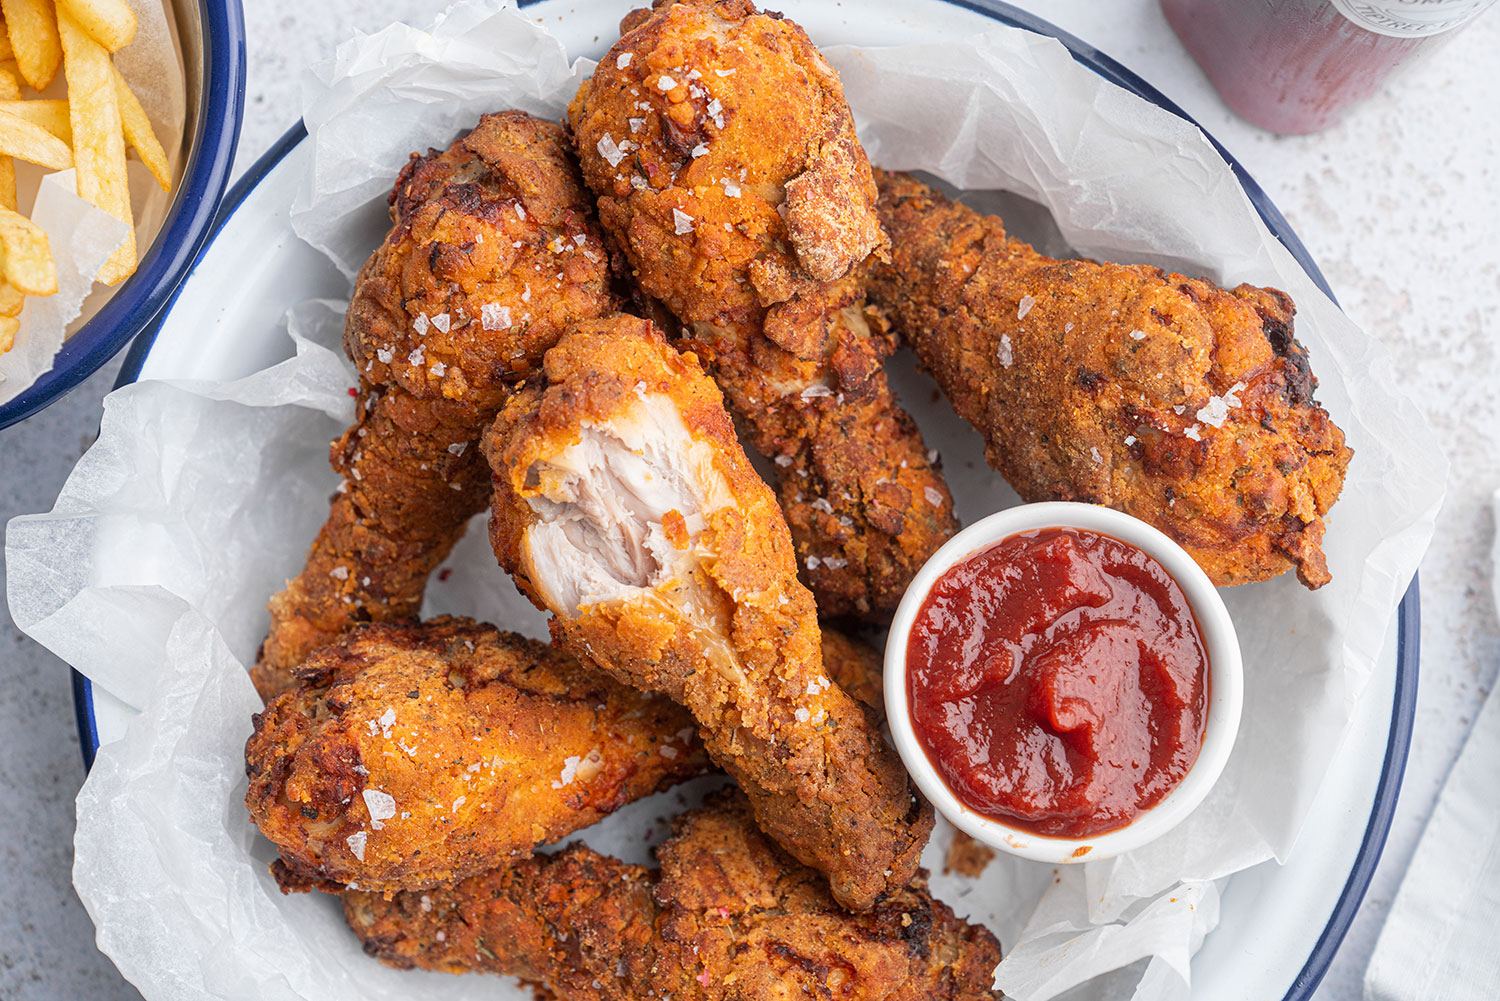 https://glutenfreecuppatea.co.uk/wp-content/uploads/2020/10/best-air-fryer-chicken-recipe-featured.jpg